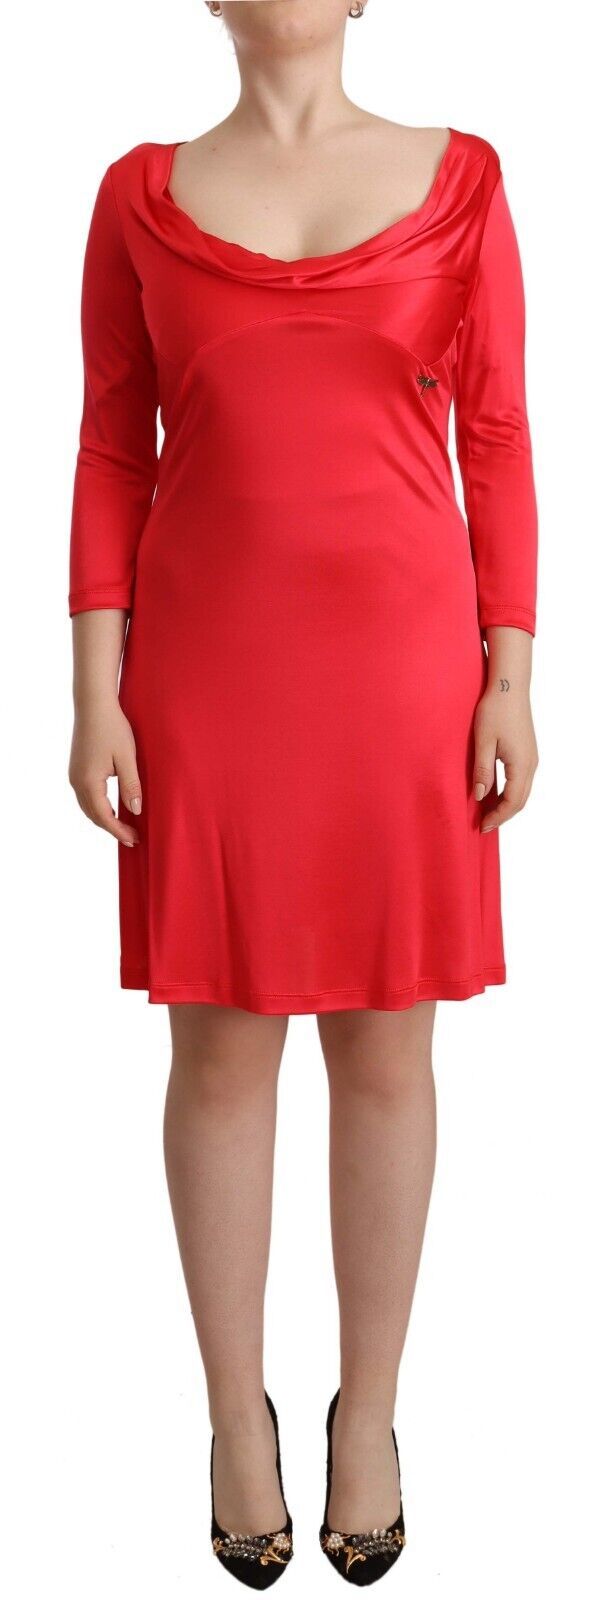 Elegant Red Knee-Length Sheath Dress